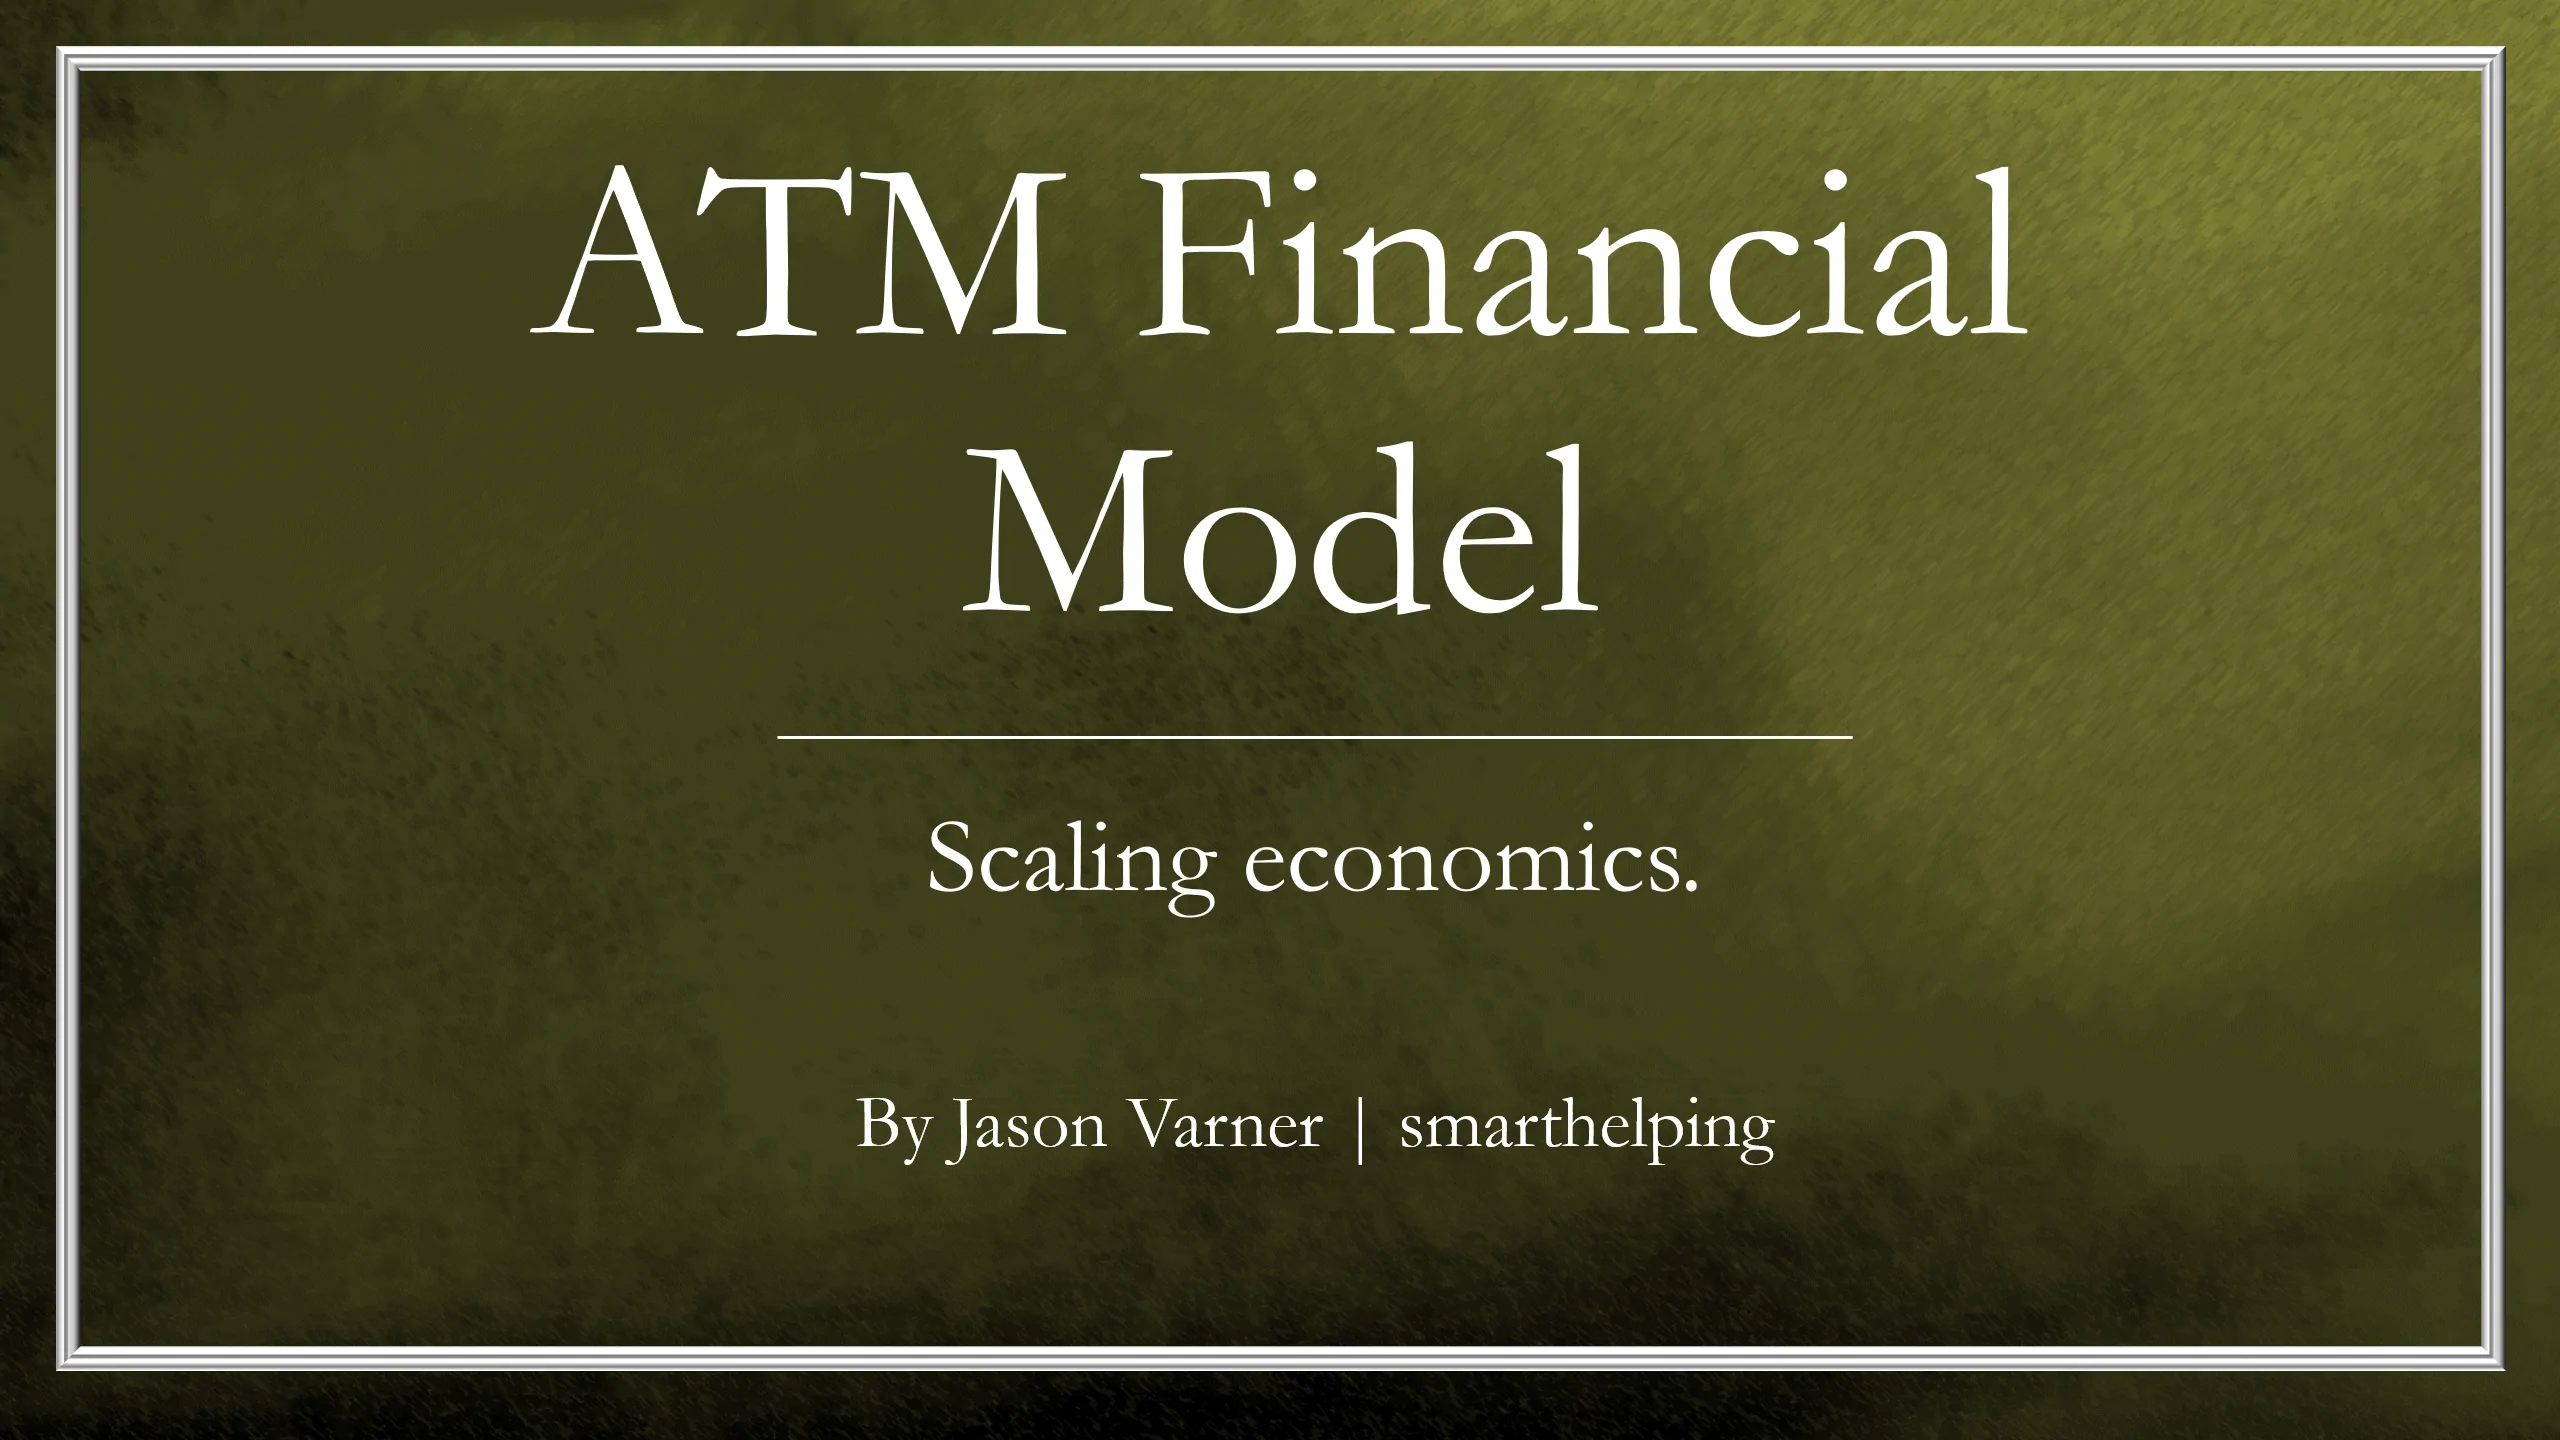 ATM Machine Financial Model: 10 Year